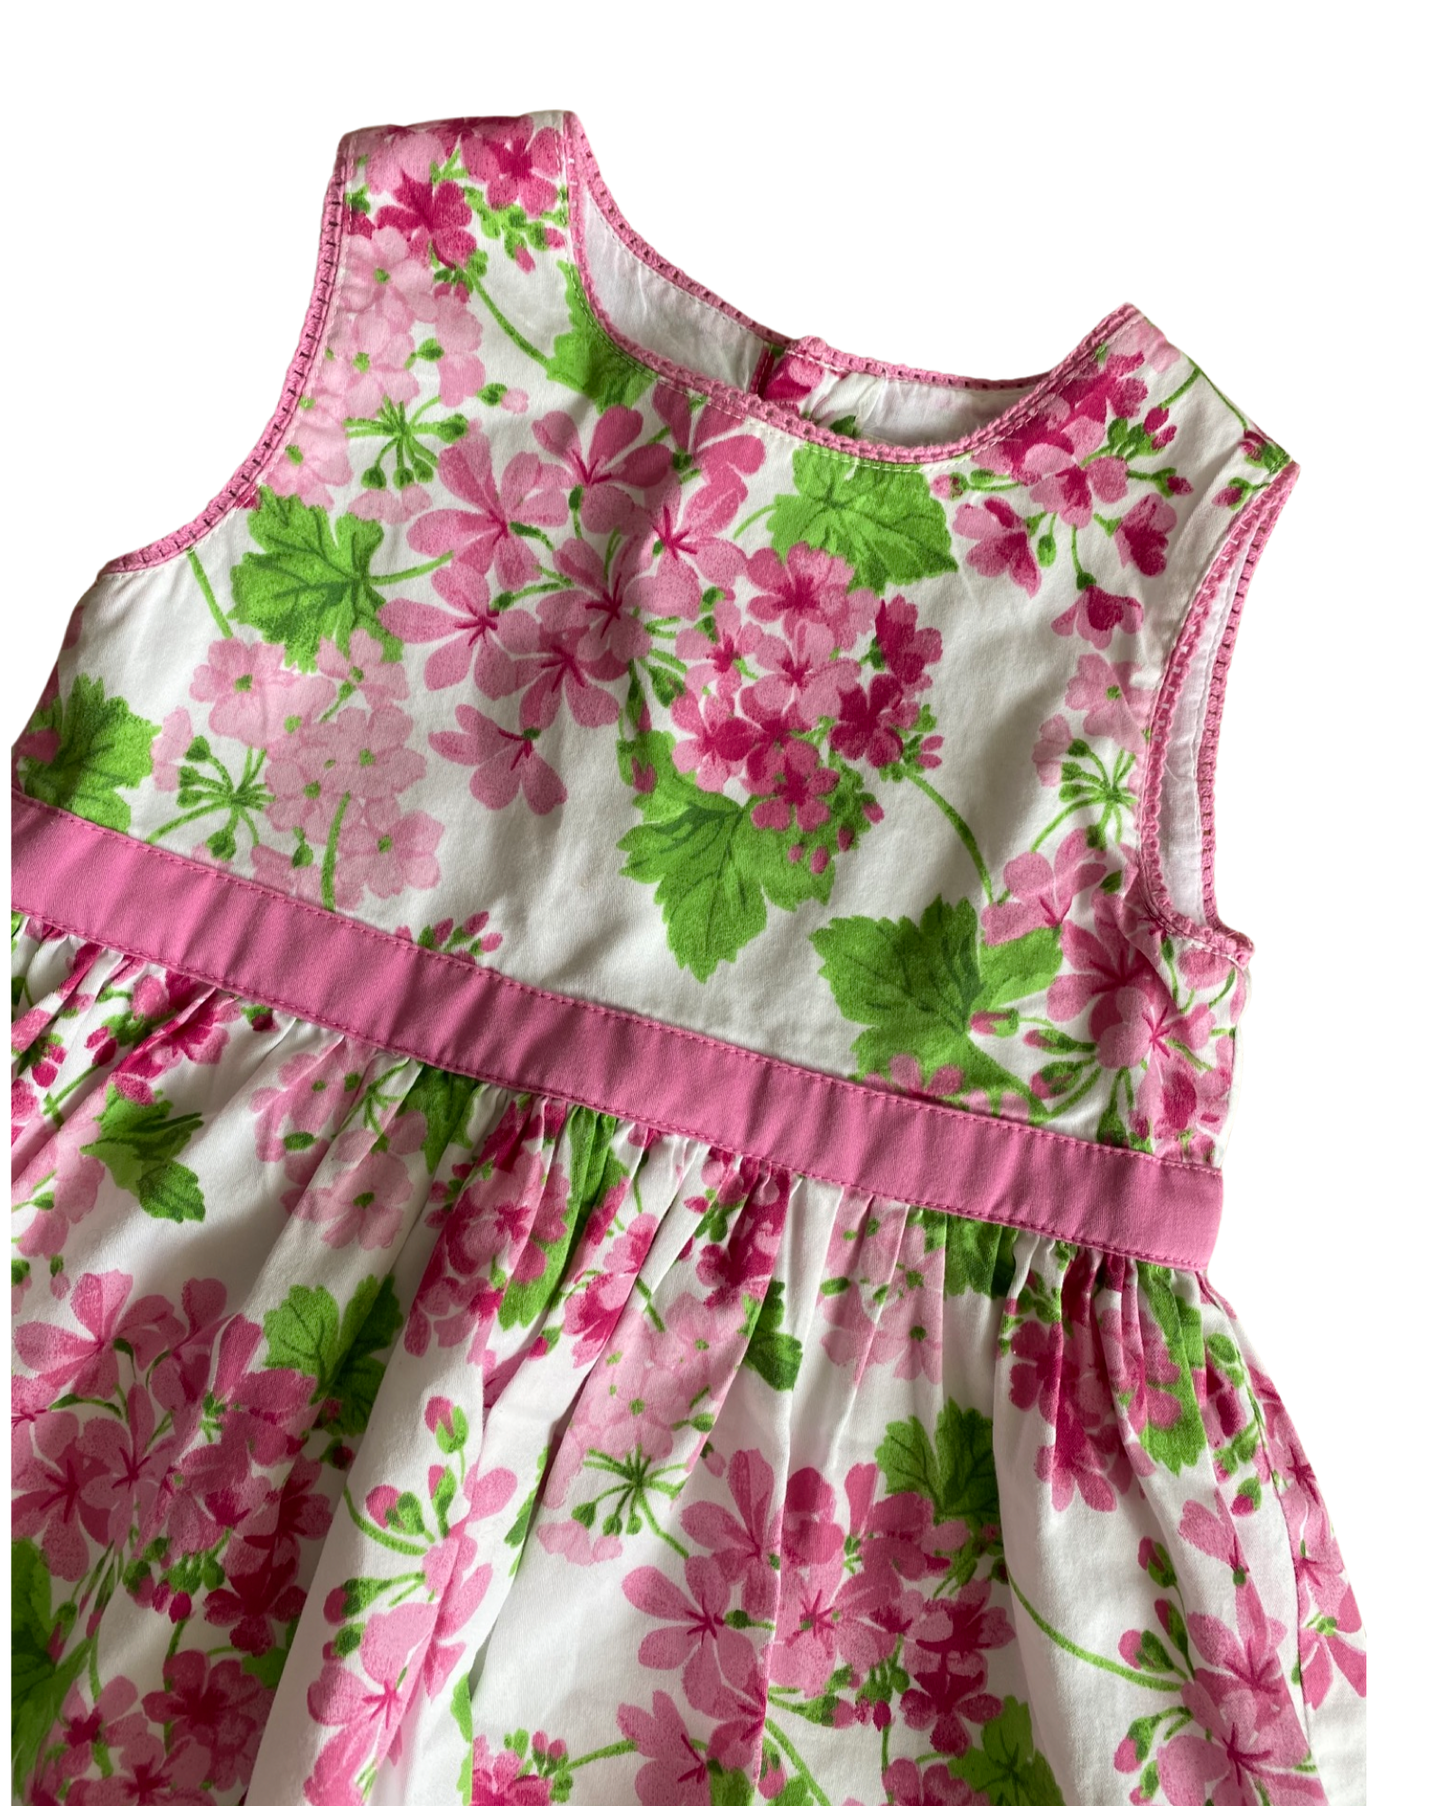 JoJo Maman Bebe floral print dress (12-18mths)